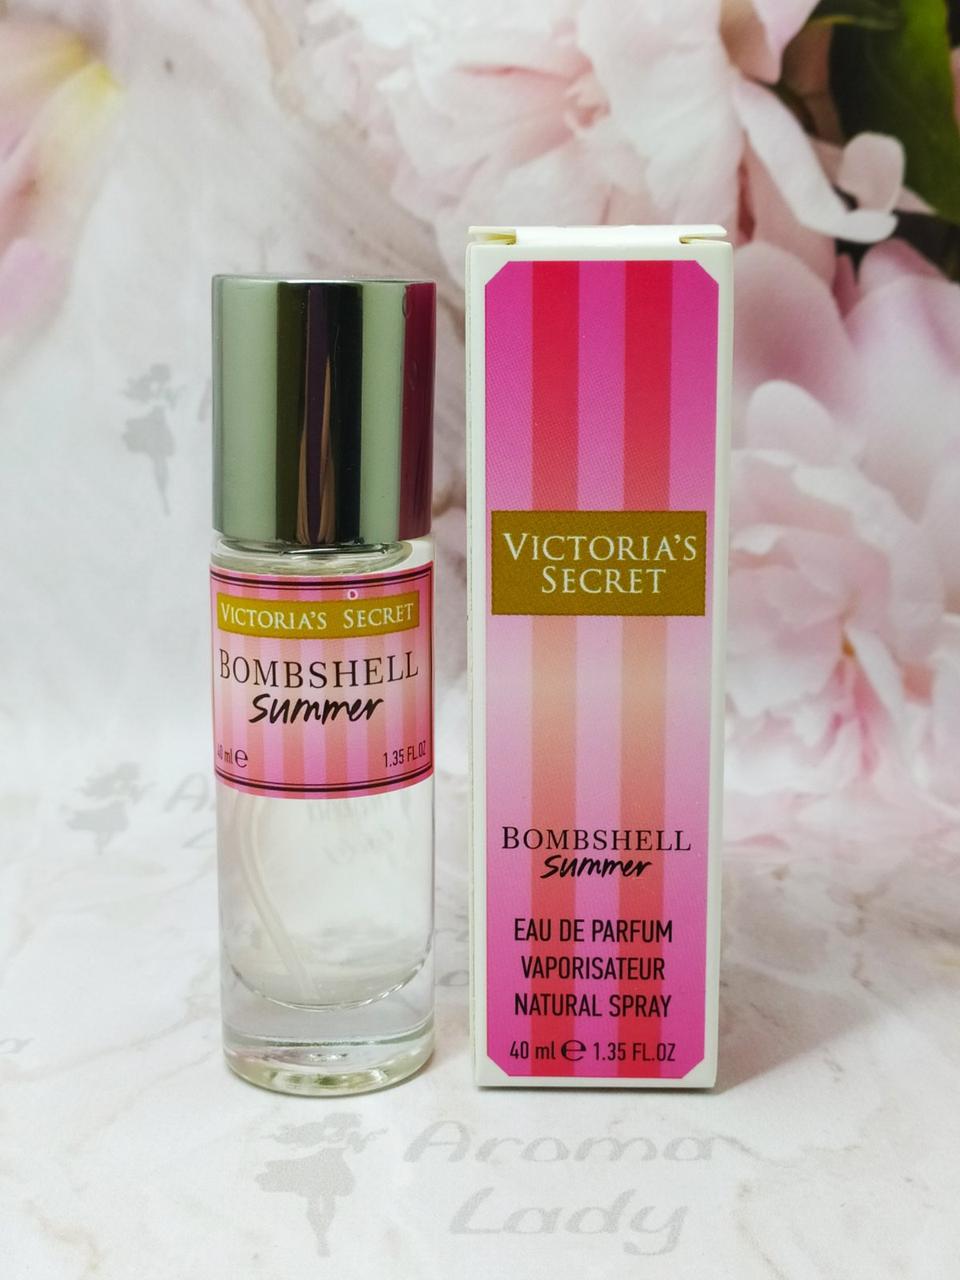 Жіночий міні парфум Victoria's Secret Bombshell Summer (Бомбшелл Саммер) 40 мл